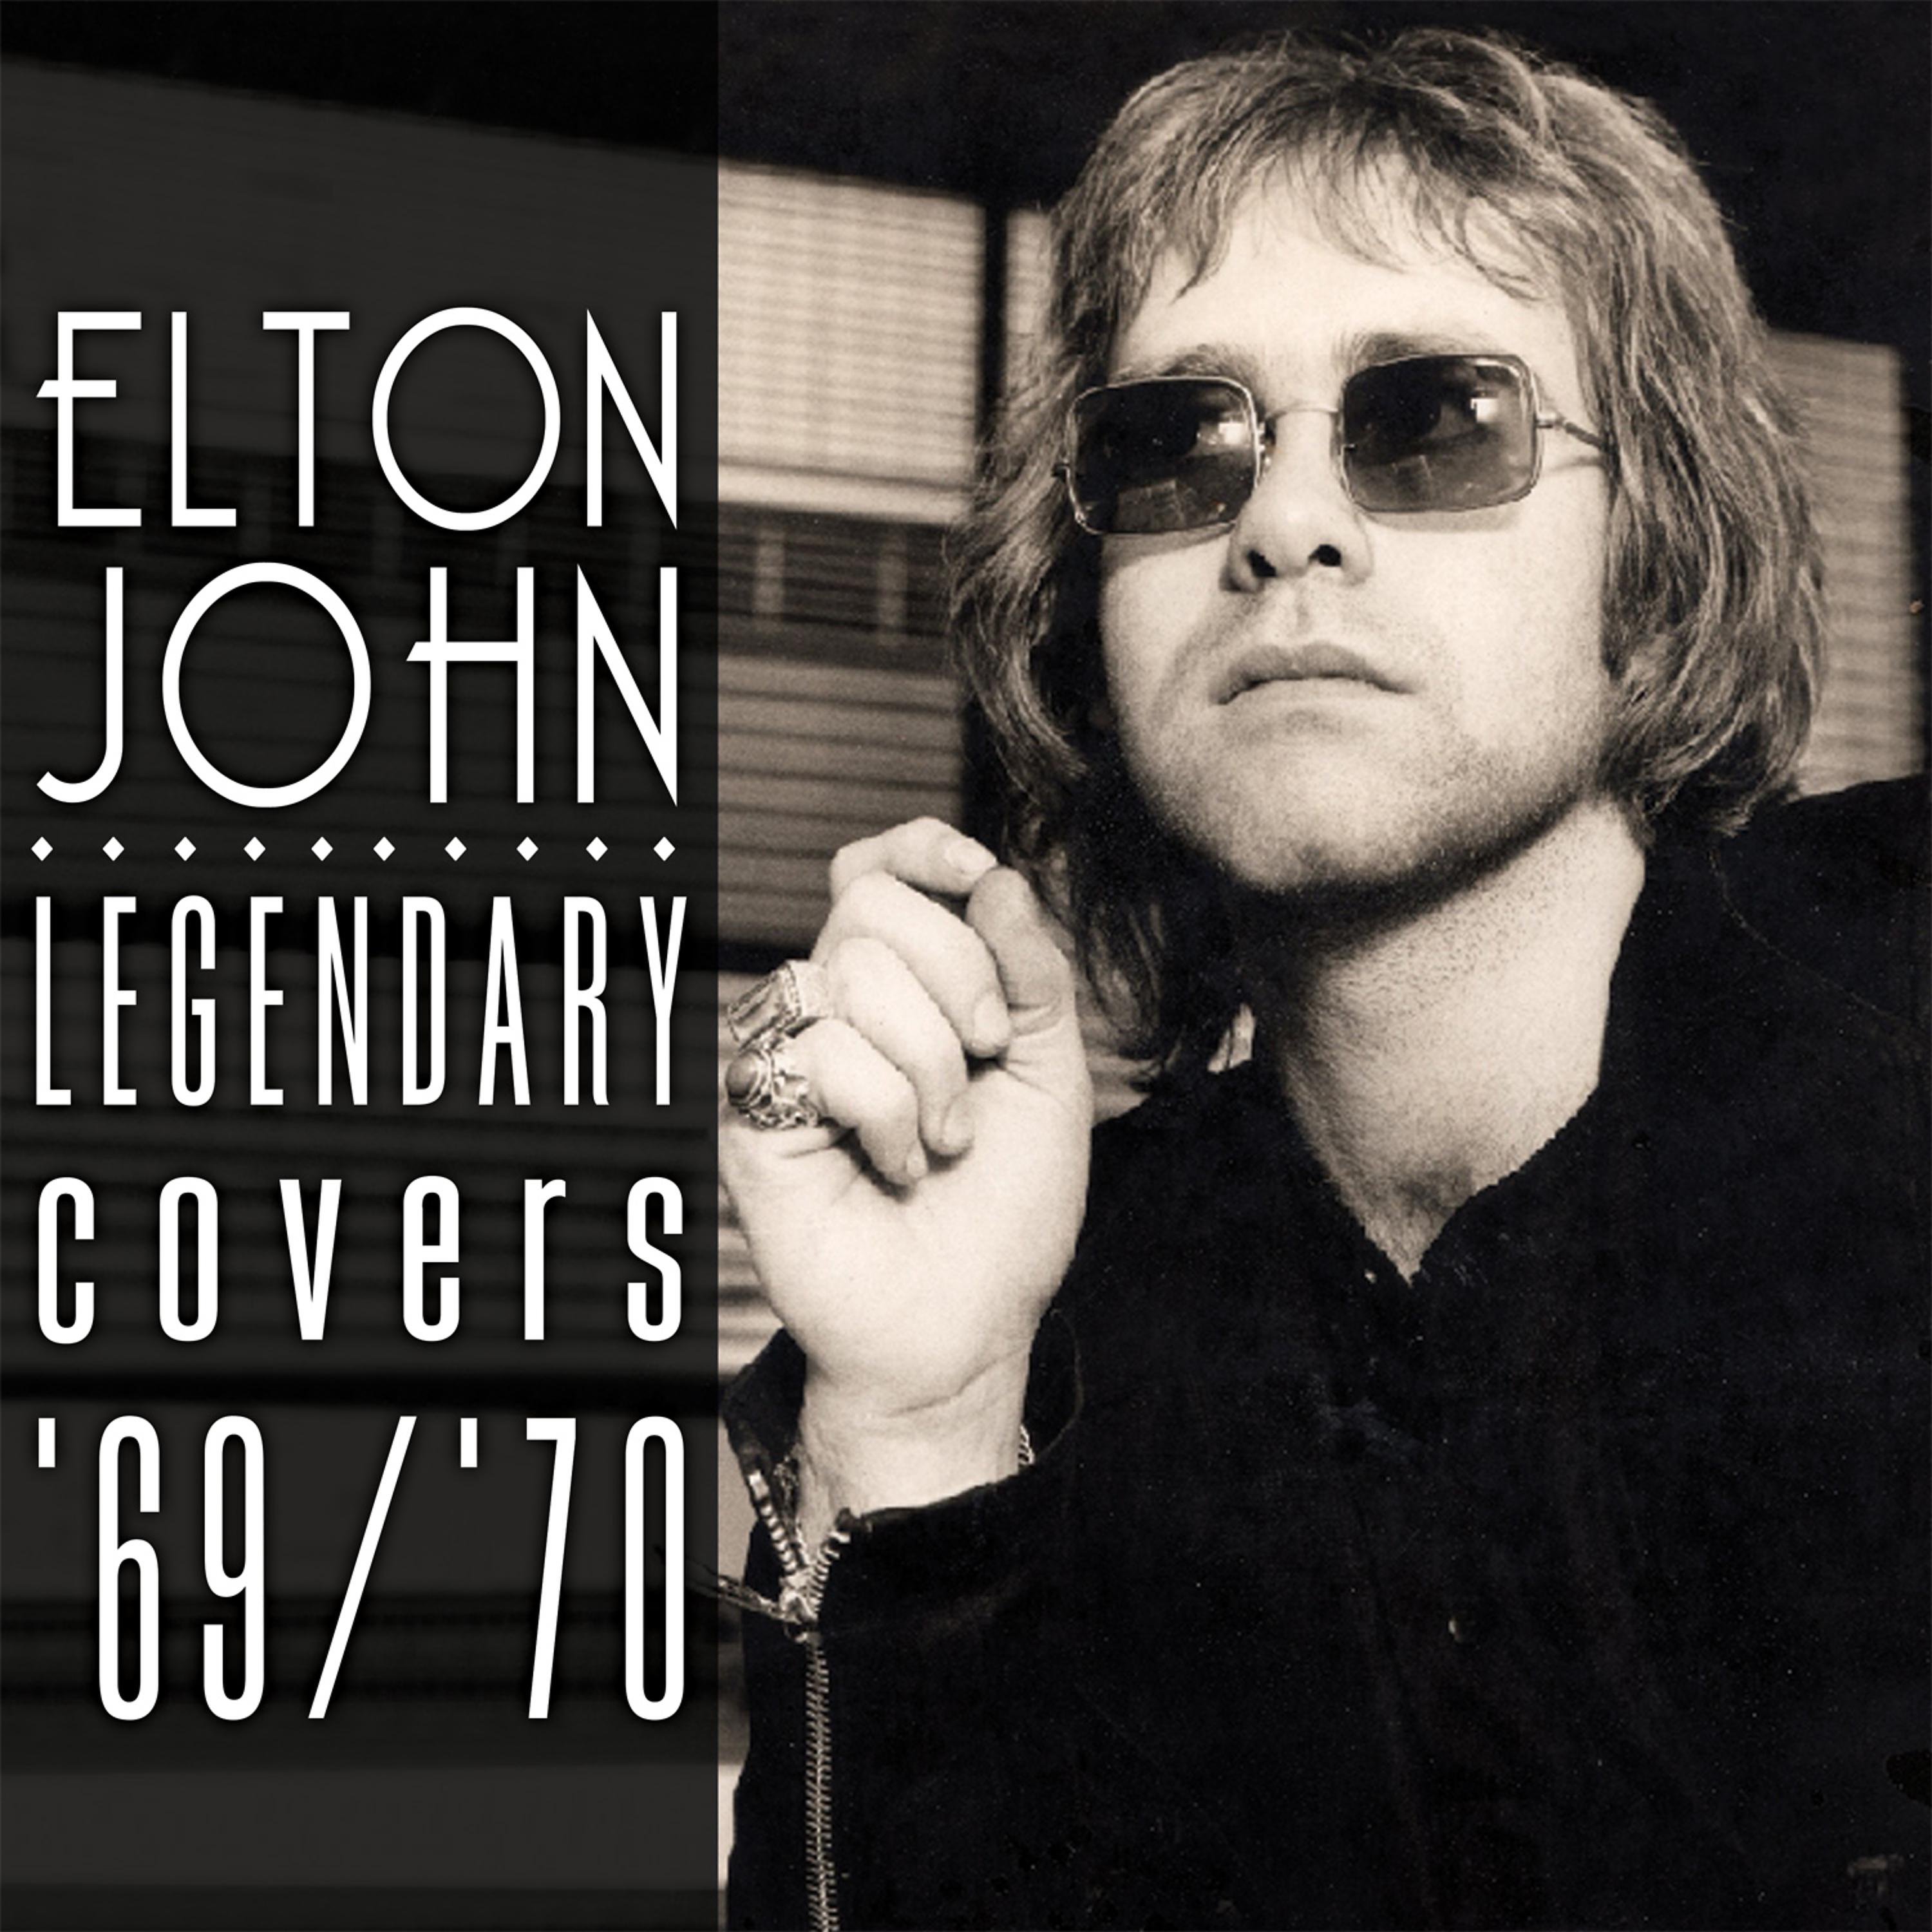 Elton John - Yellow River